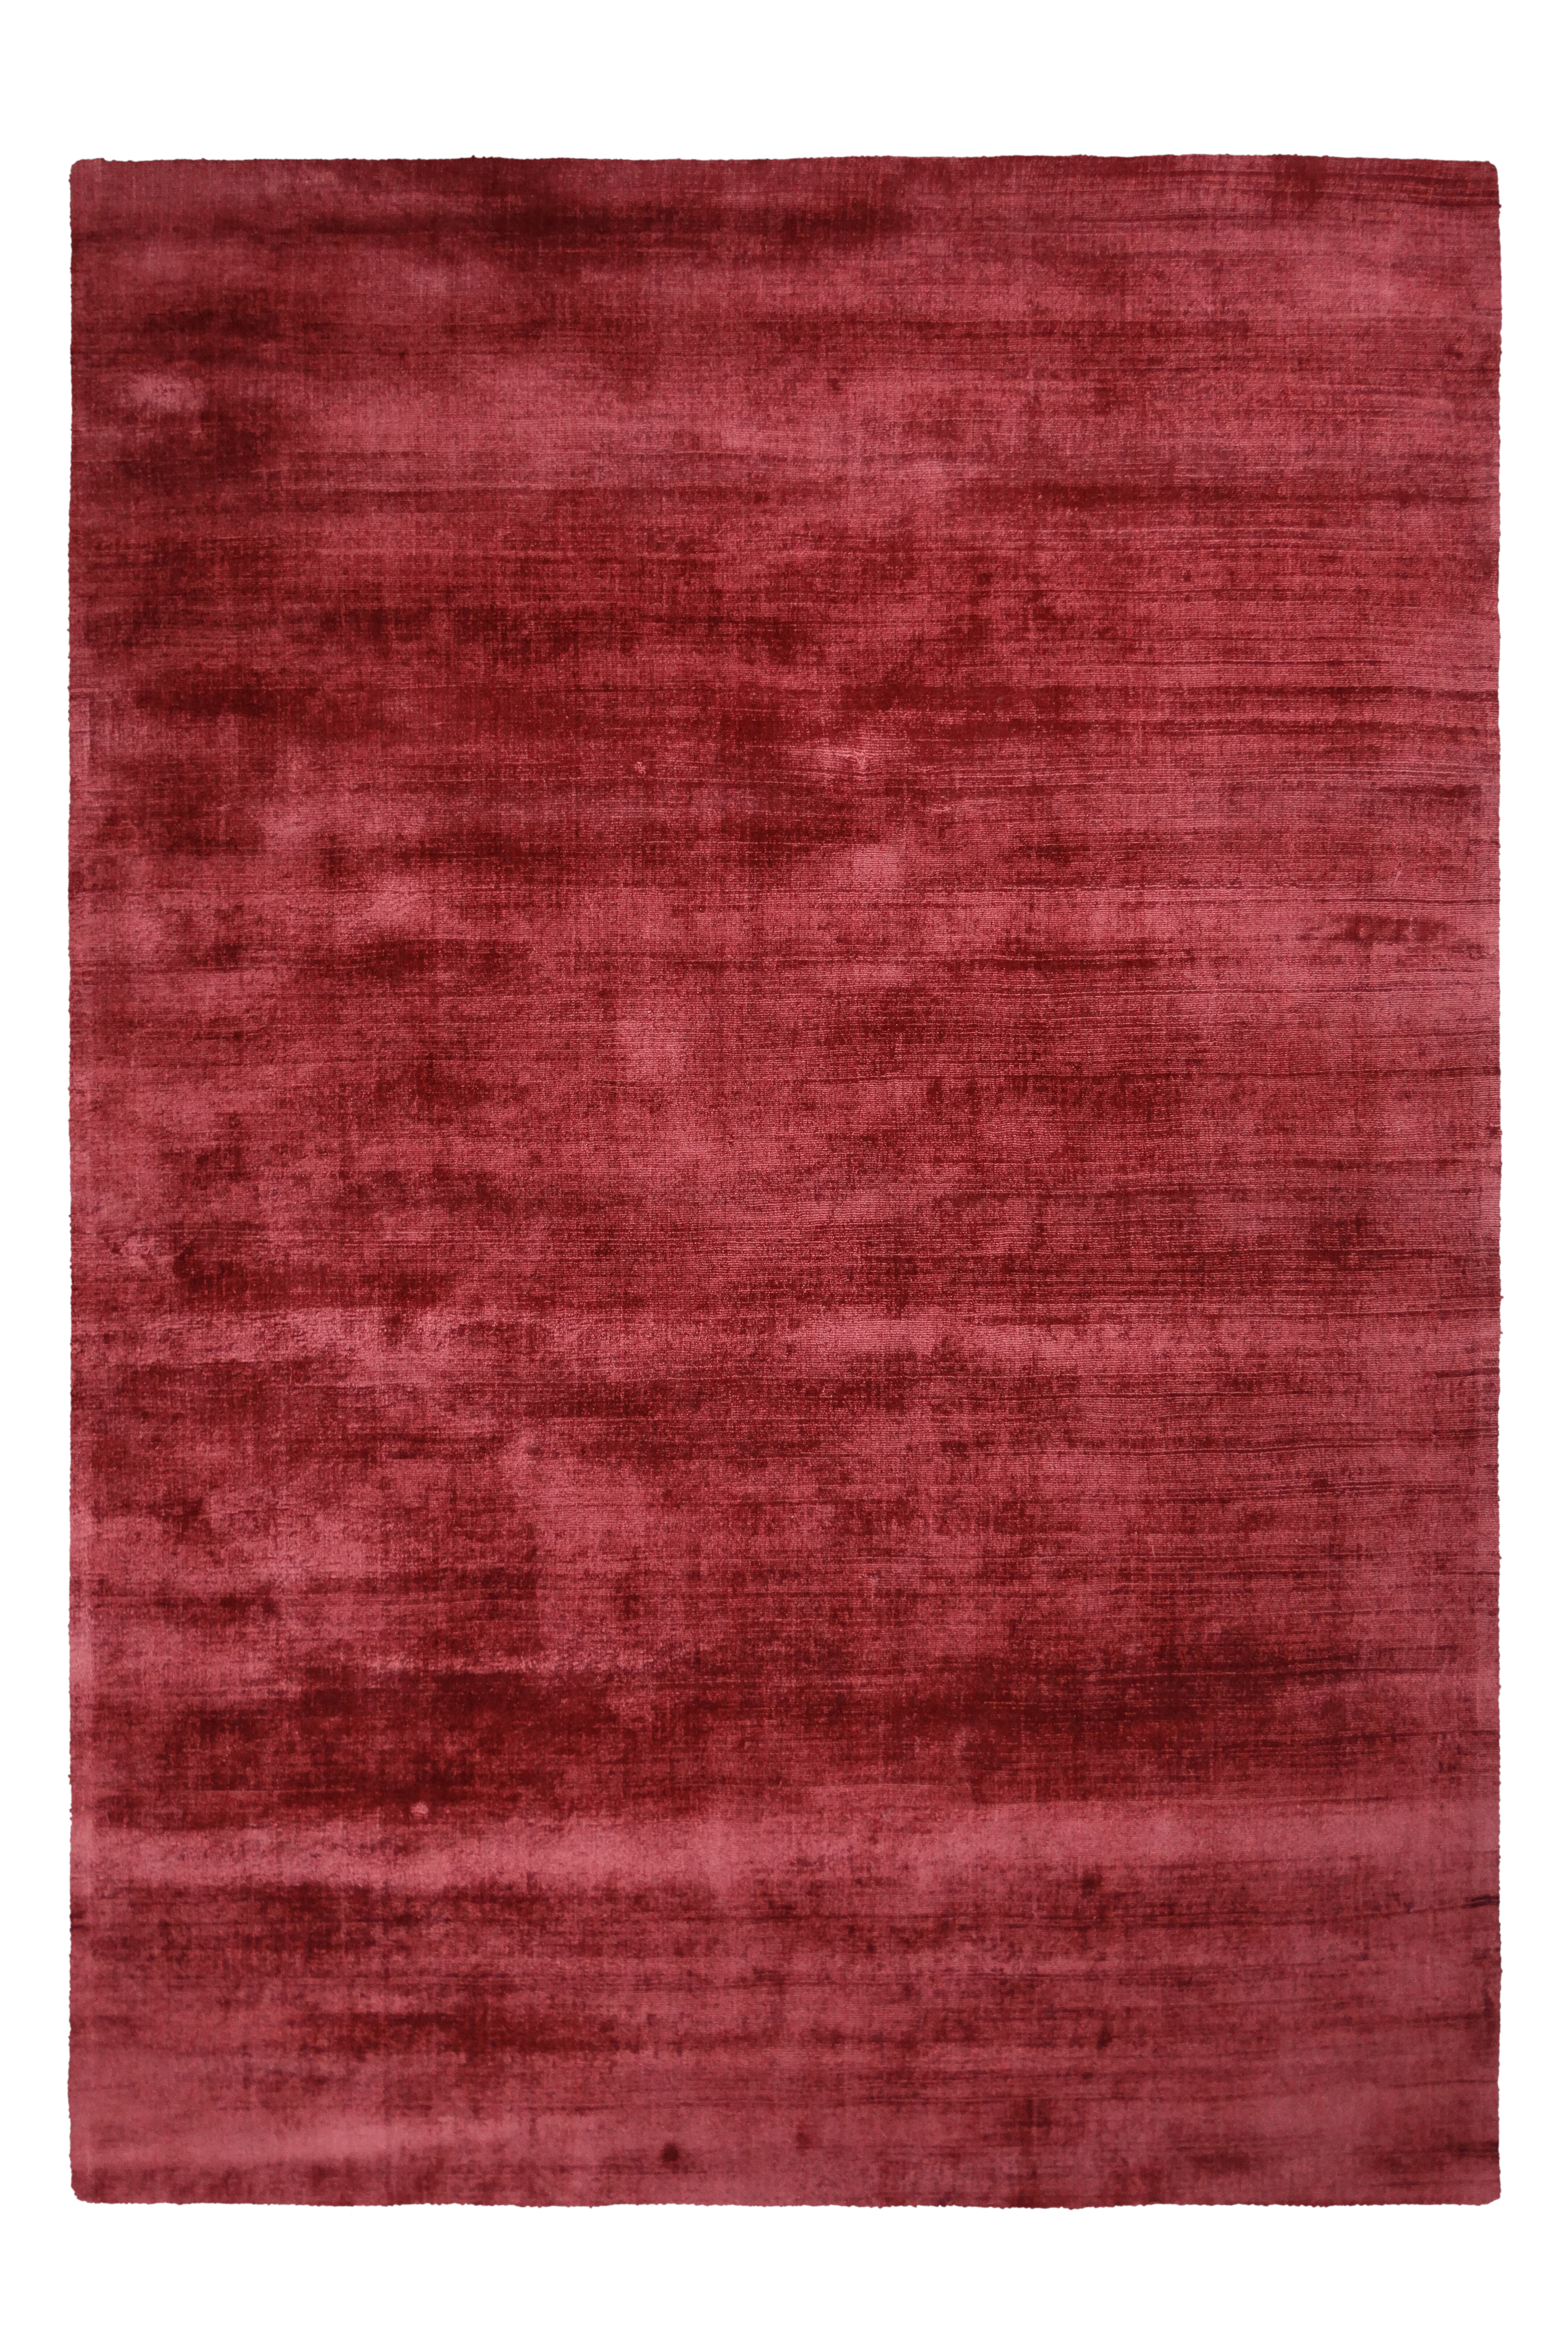 Kayoom Vloerkleed 'Luxury 110' kleur Rood, 200 x 290cm